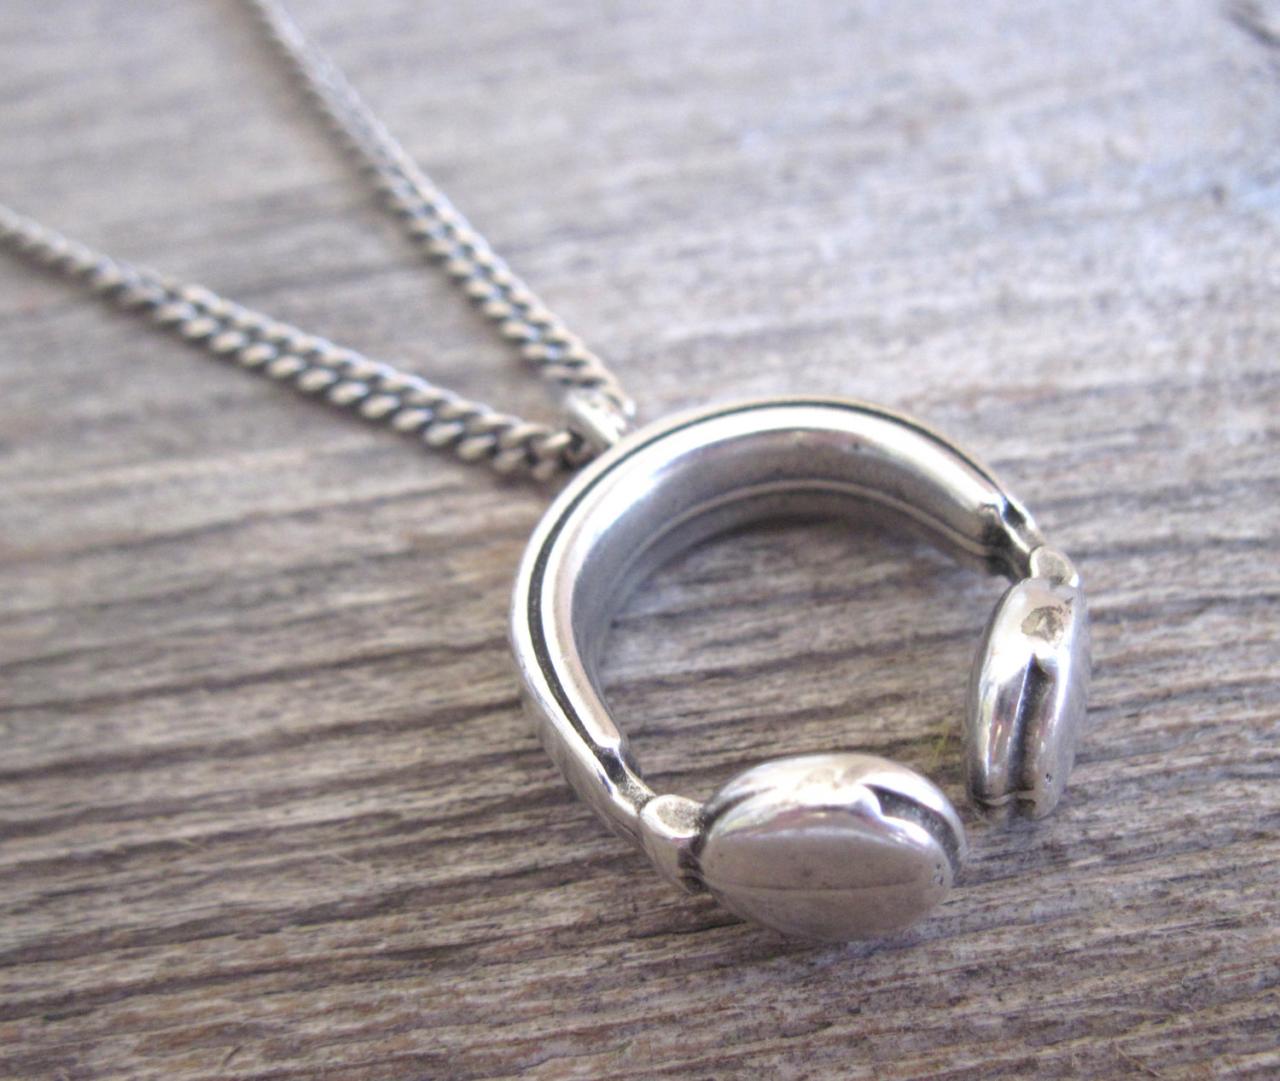 Men Necklace - Men Silver Necklace - Men Jewelry - Men Gift - Boyfriend Gift - Husband Gift - Present Fo Men - Male Jewelry - Male Necklace